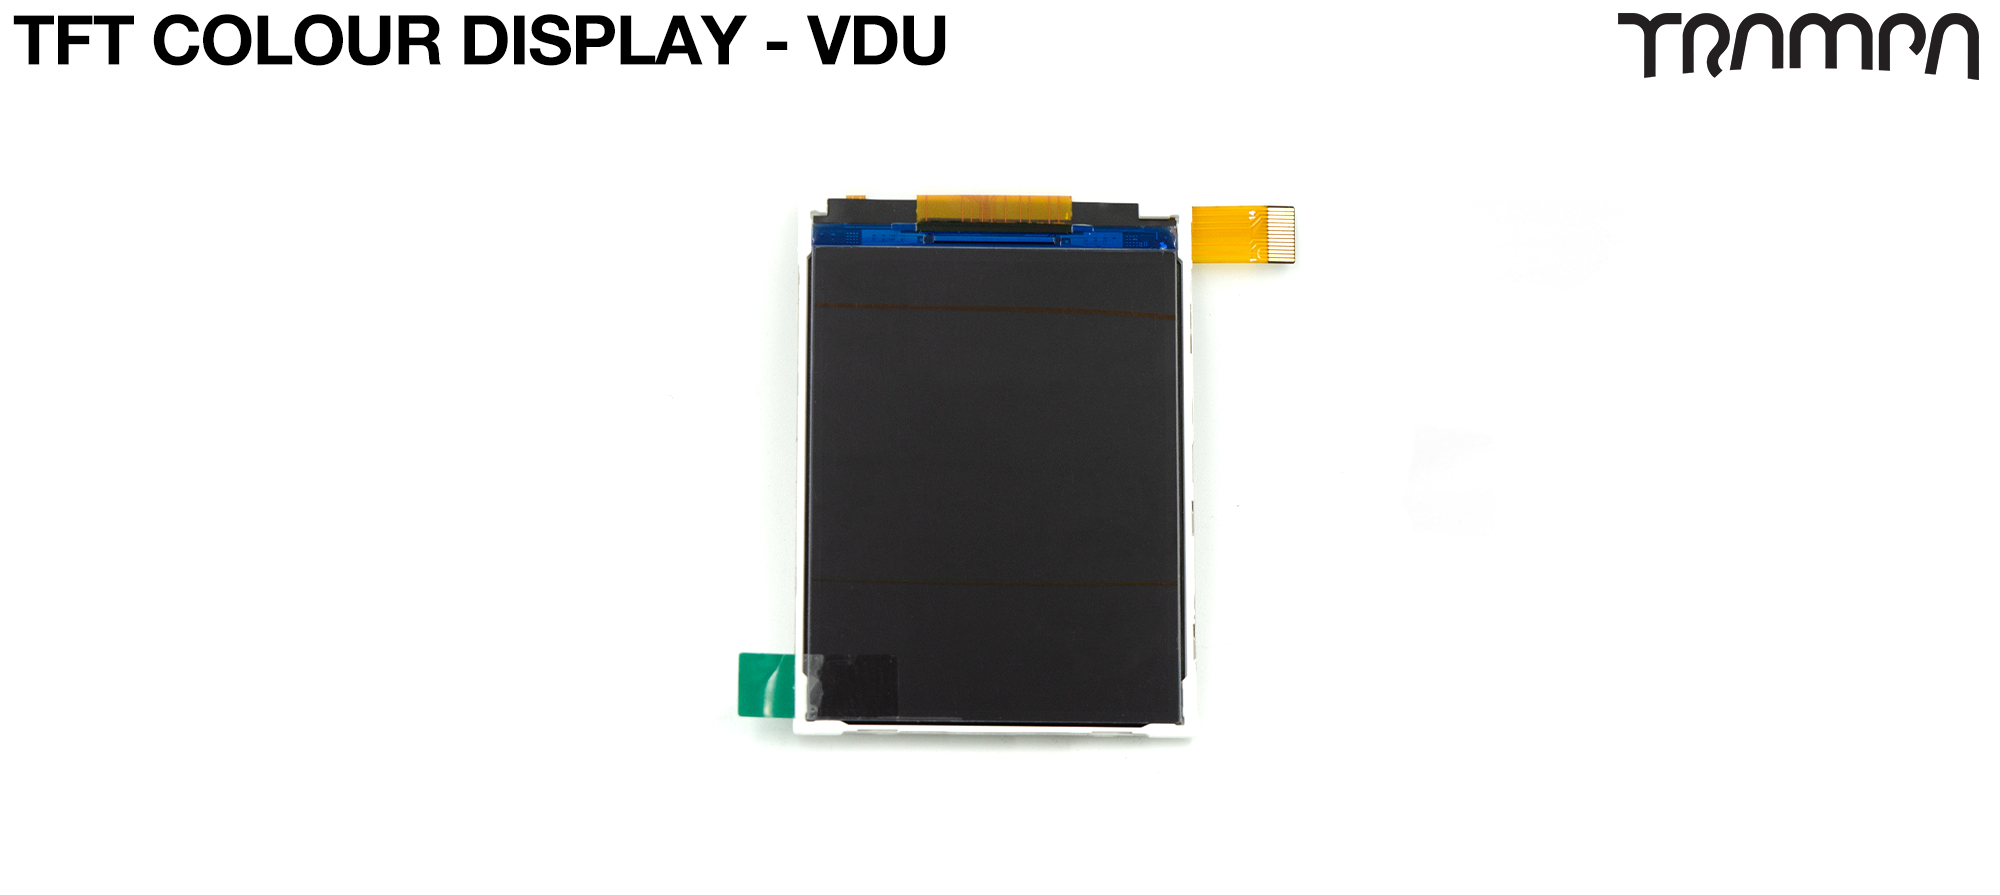 VESC DISPLAY UNIT - TFT IPS High resolution Colour DISPLAY